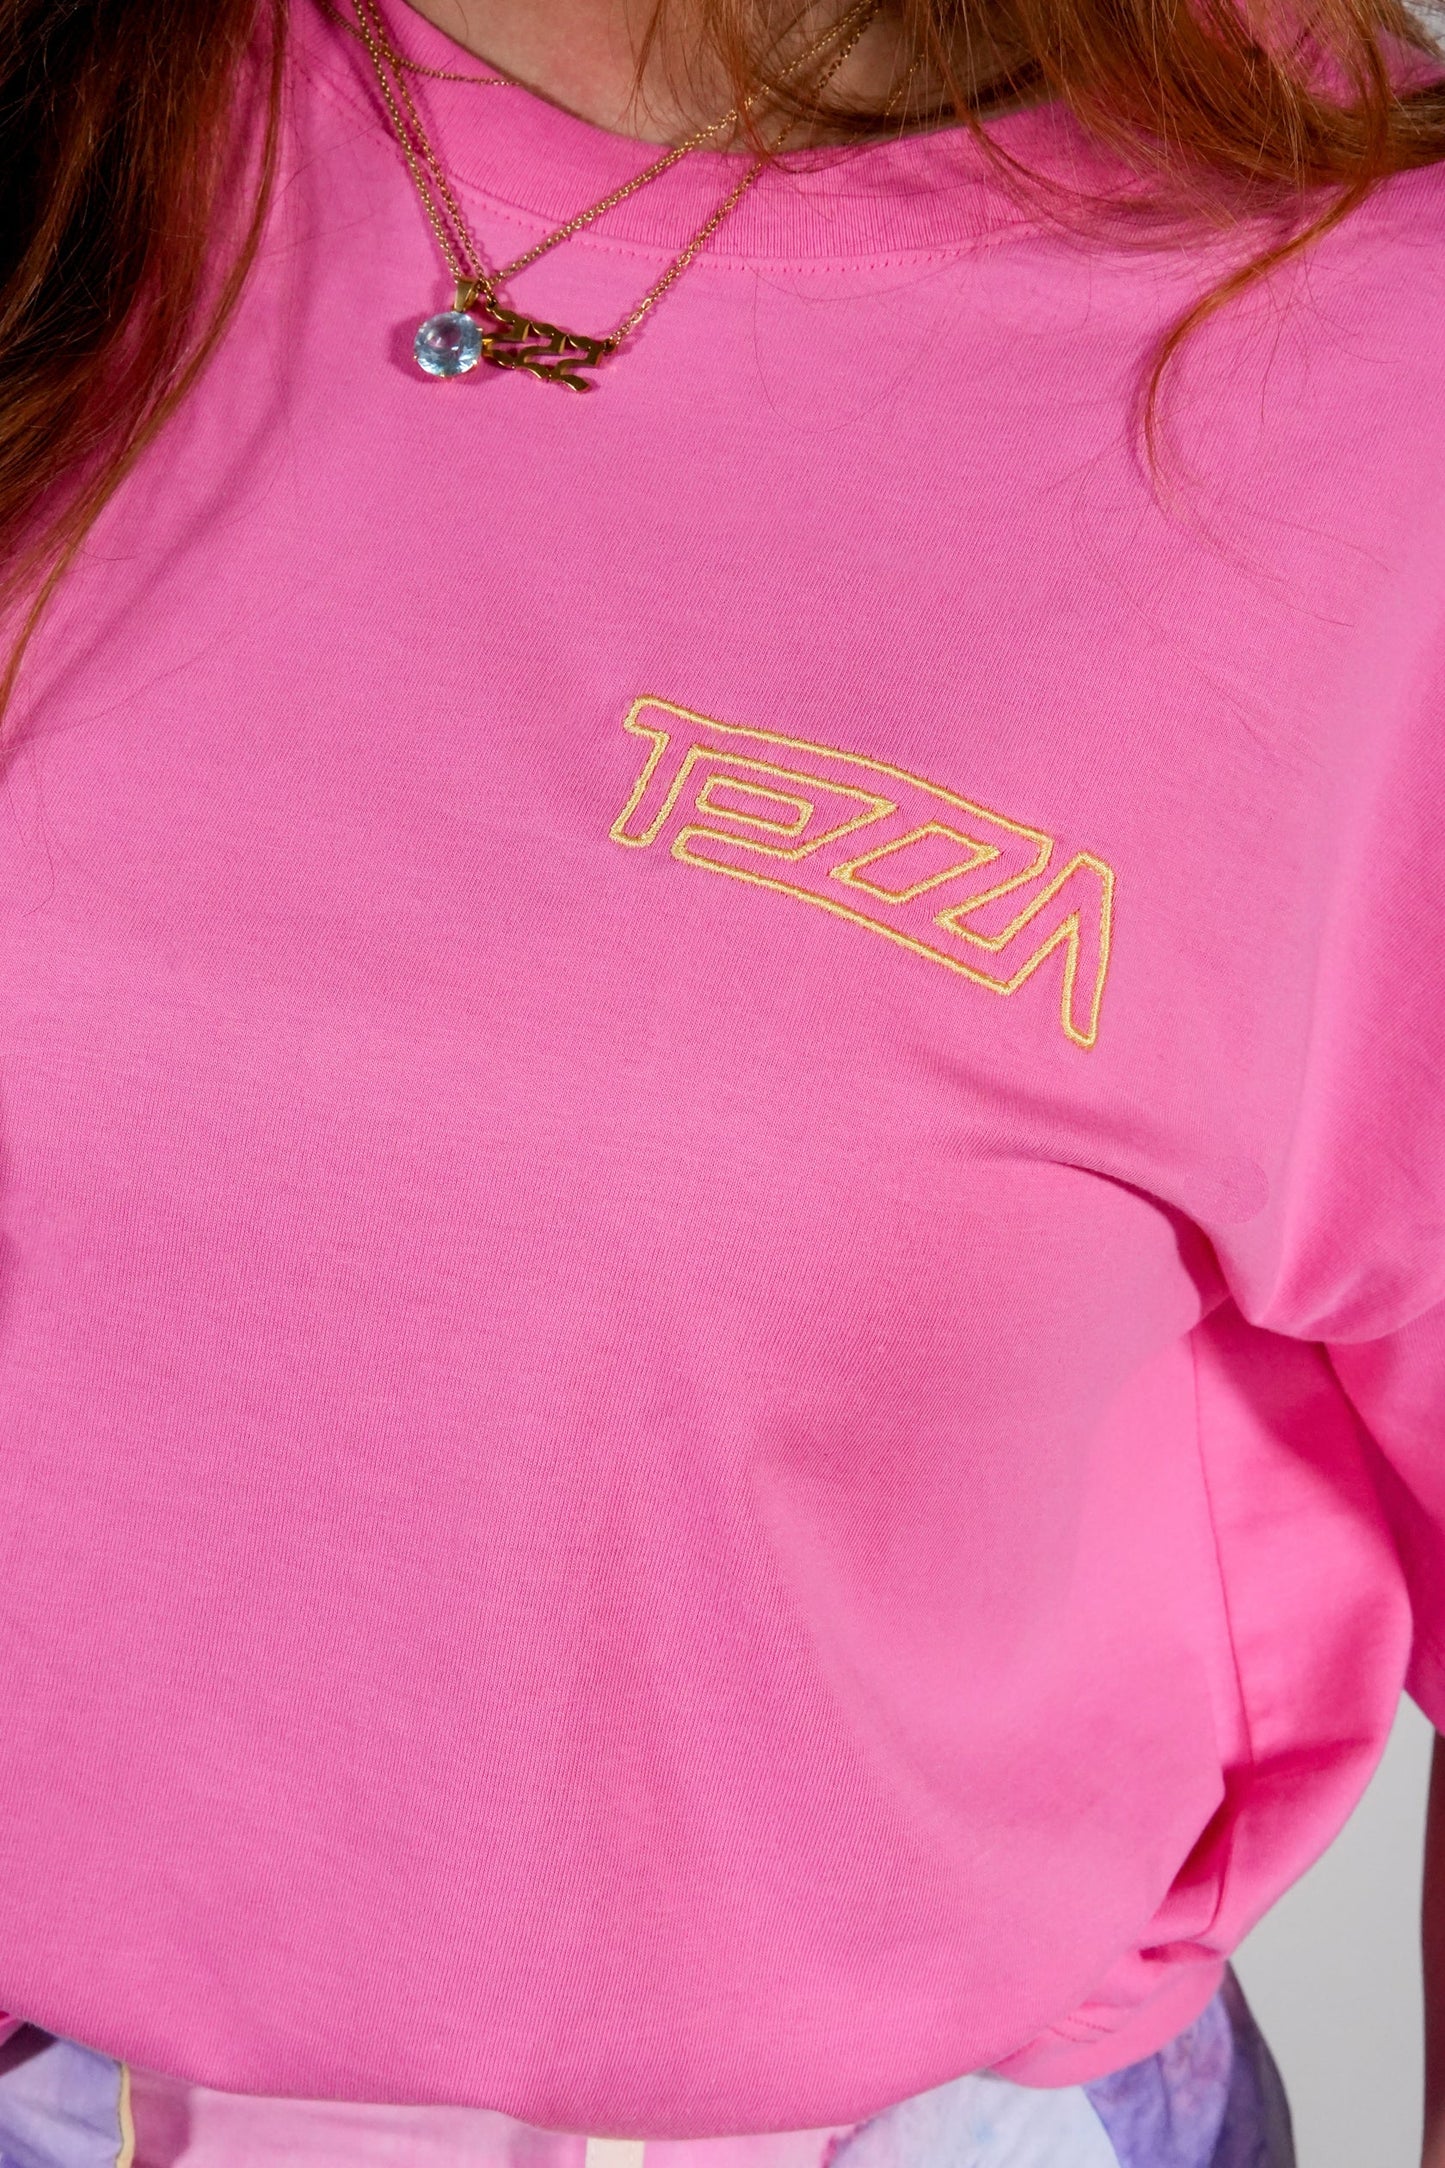 T-shirt pink